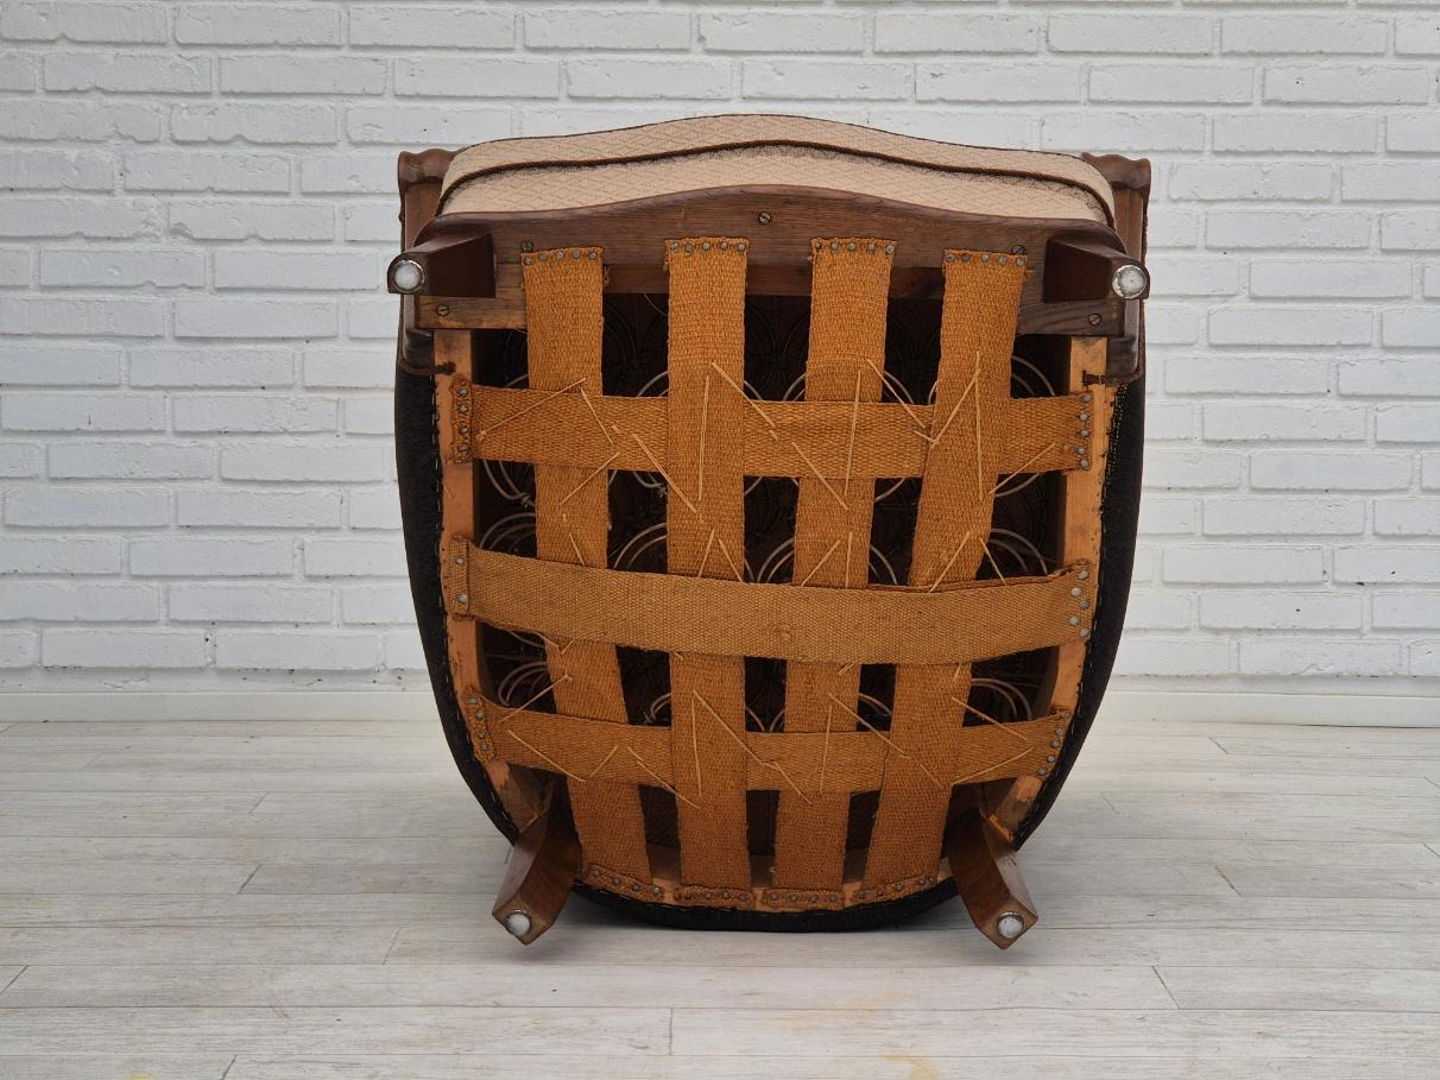 1950s, Danish vintage armchair, light brown cotton/wool, oak wood.